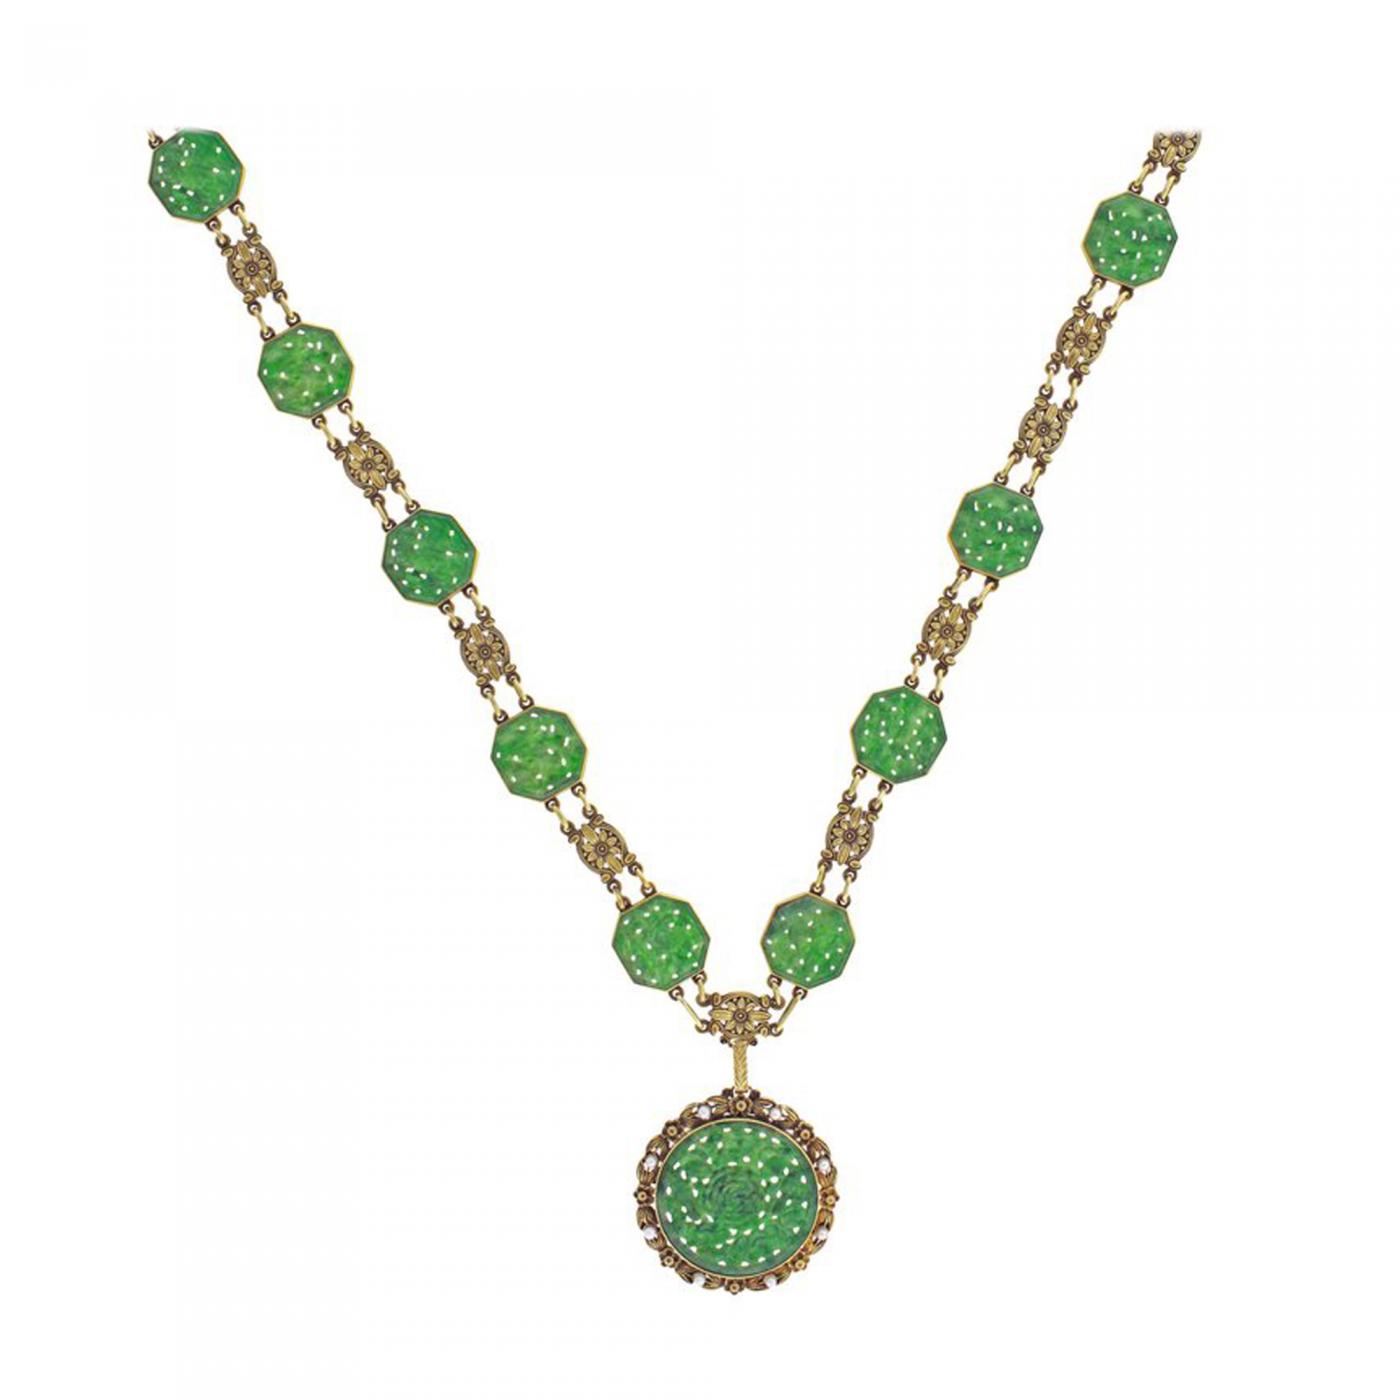 Tiffany & Co. - Tiffany & Co. Art Nouveau Jade Sautoir Necklace Bracelet